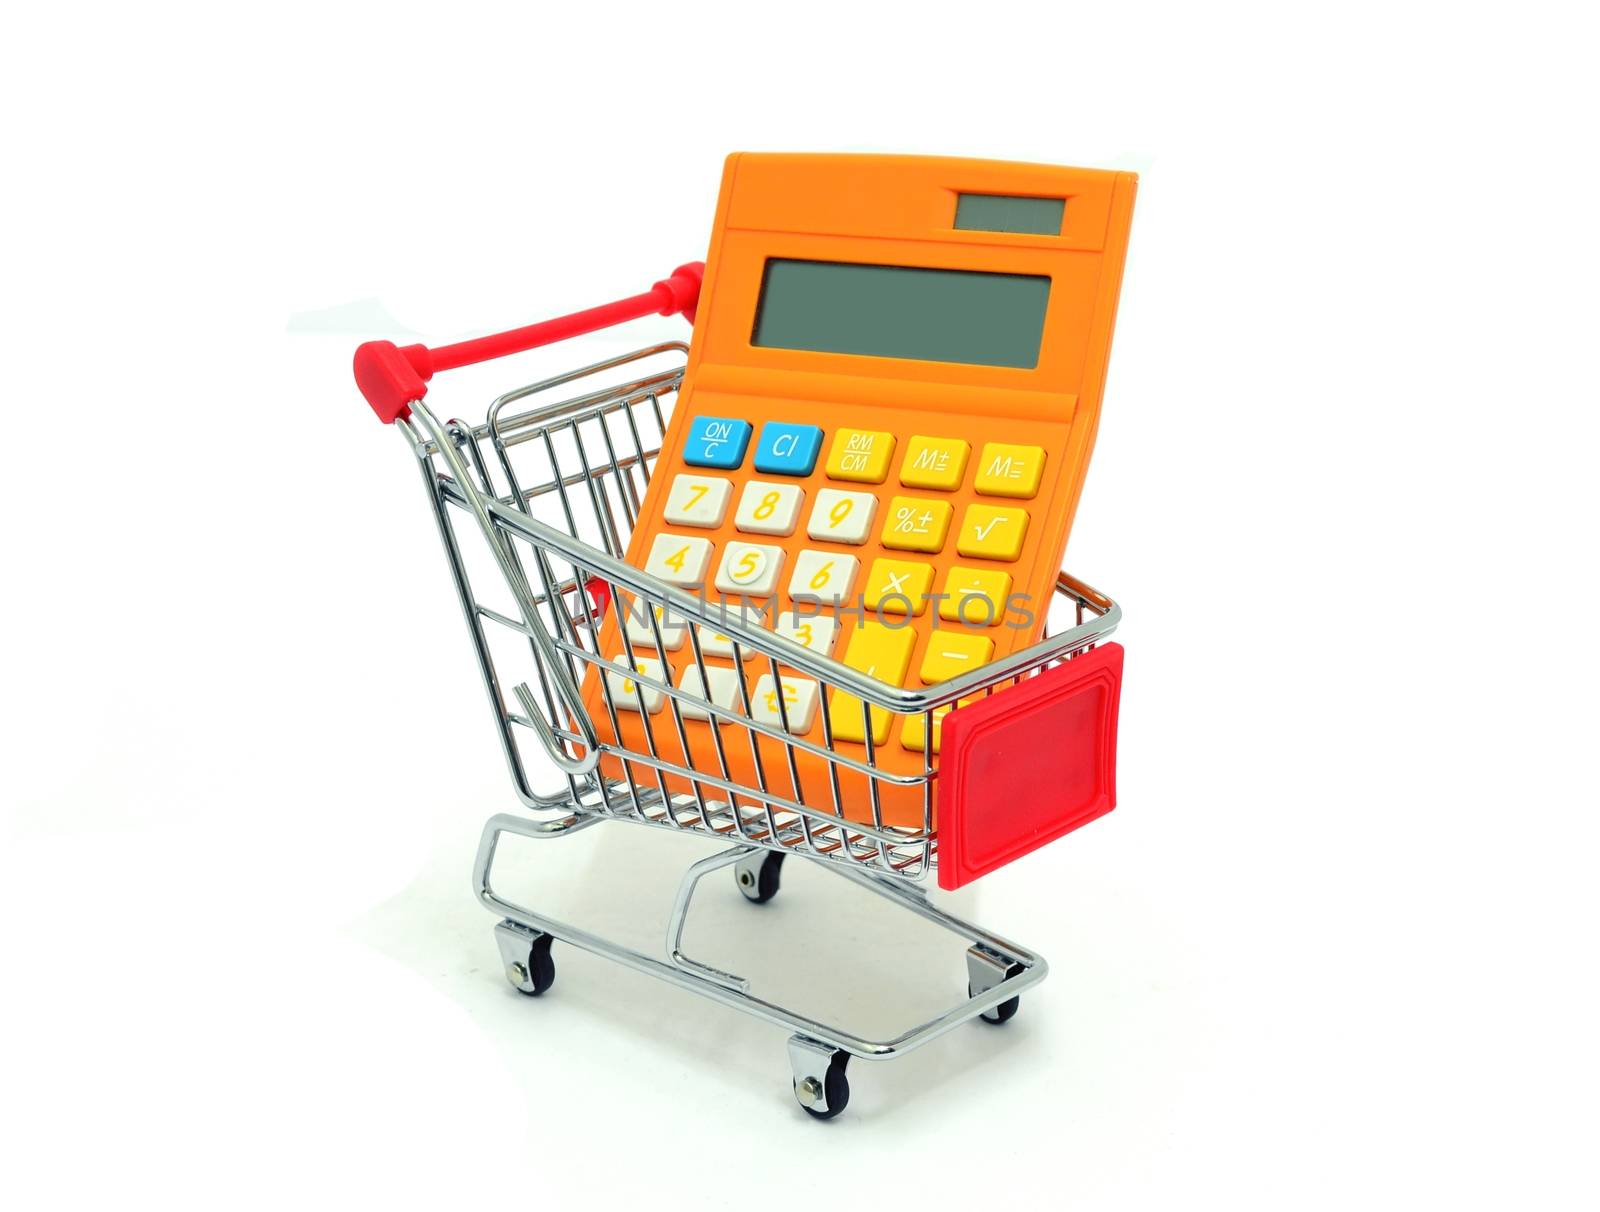 Calculator in Shopping Trolley